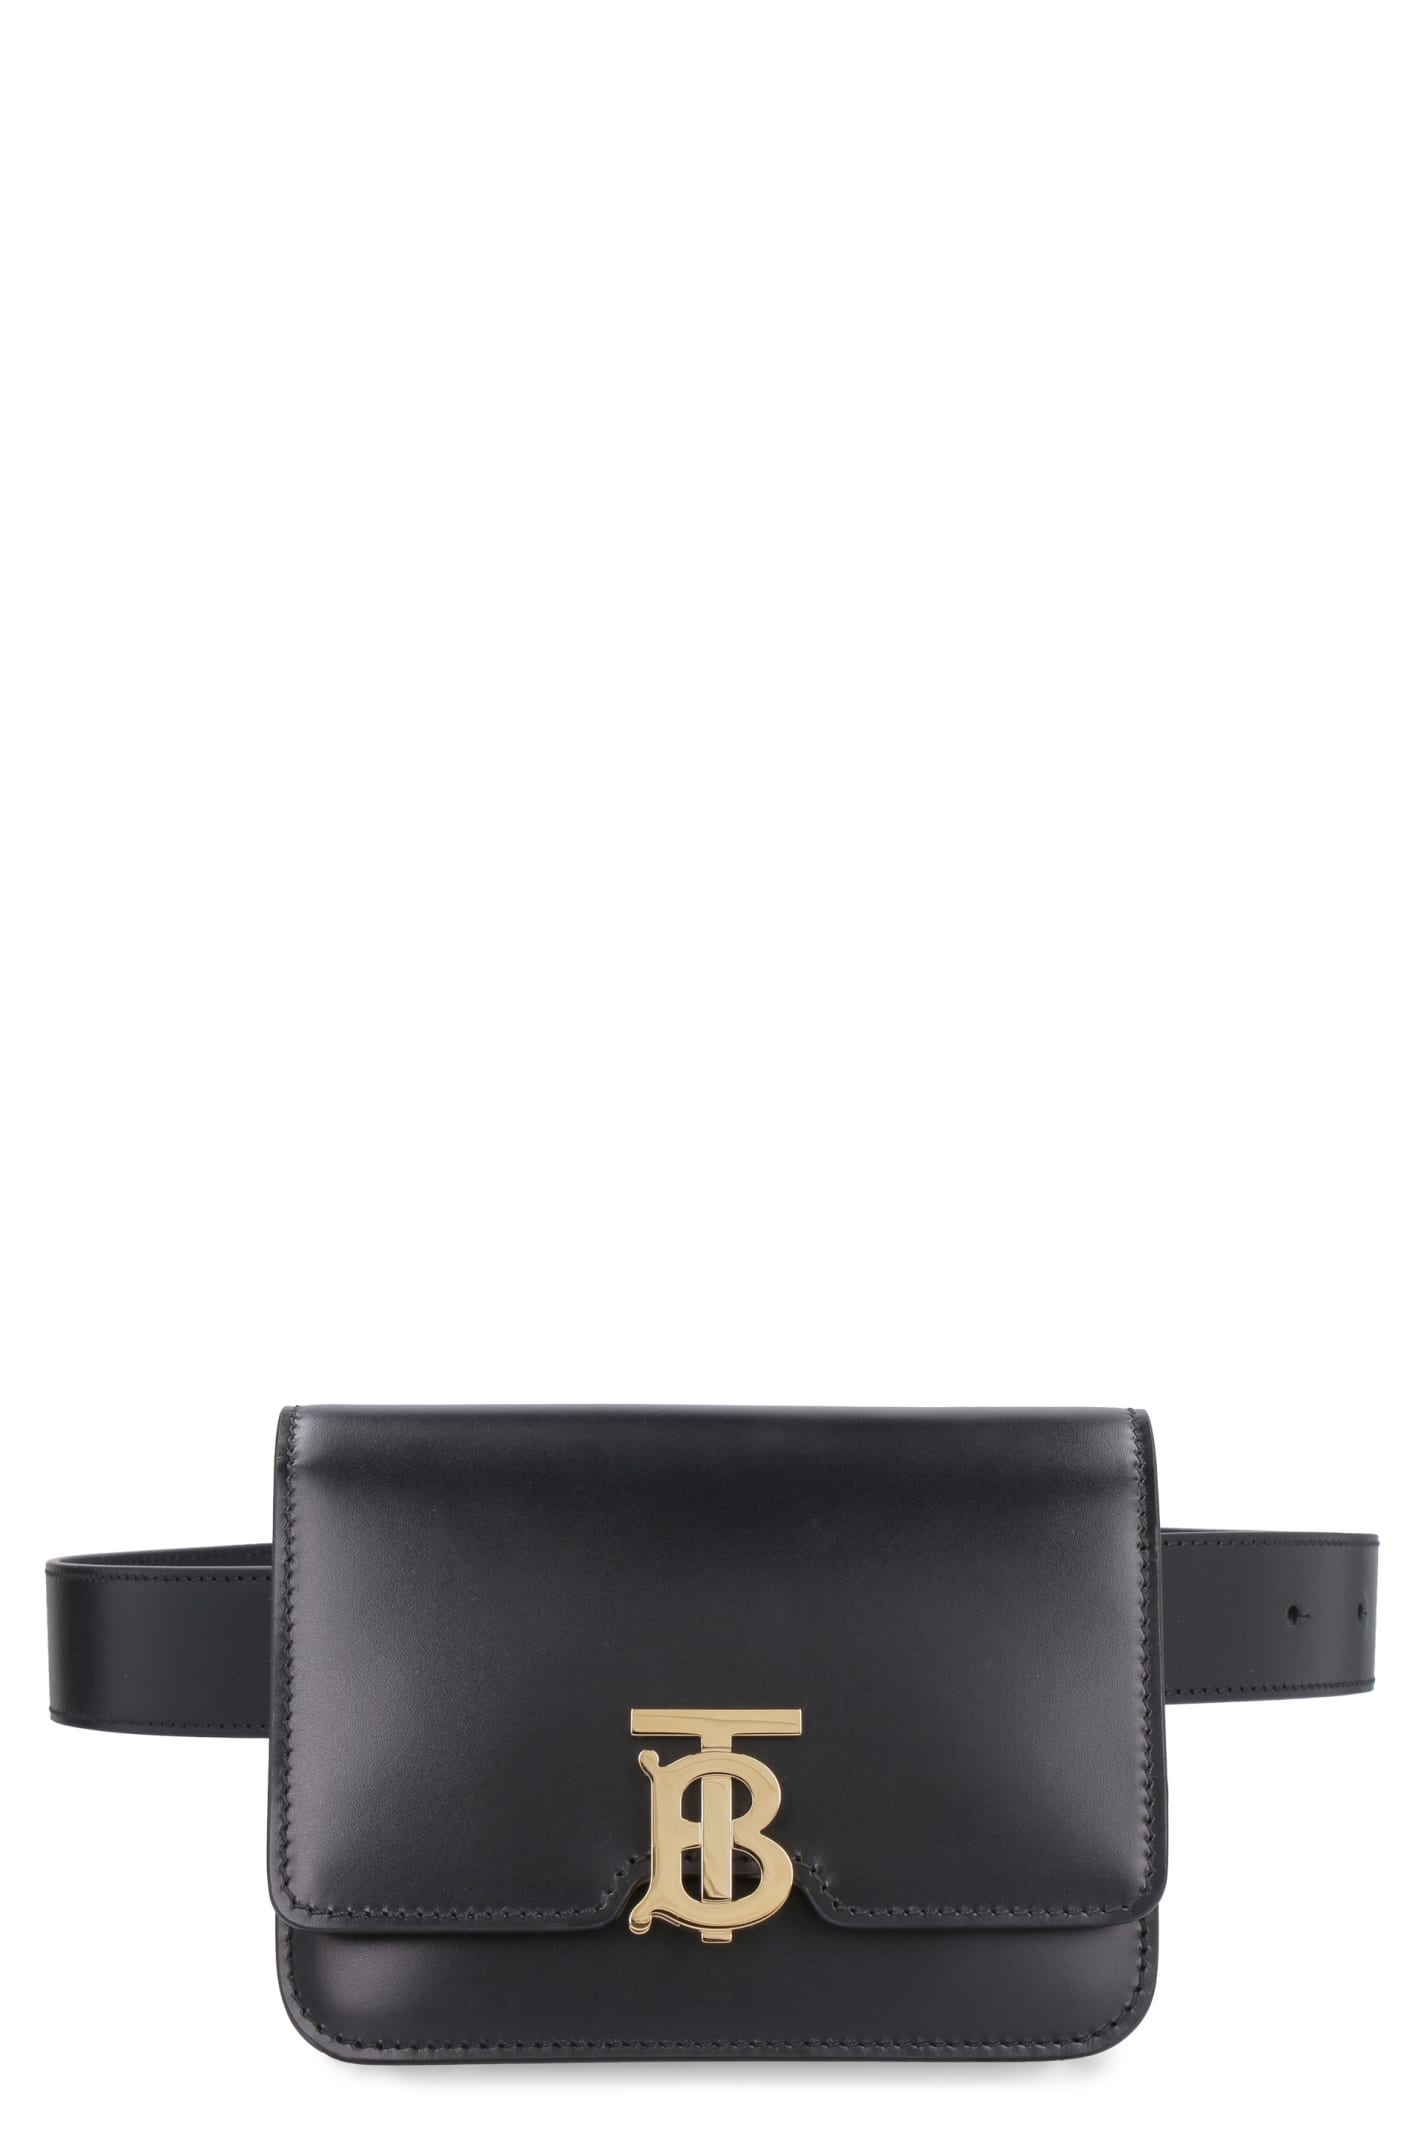 Burberry Burberry Tb Bag Leather Belt Bag - black - 10973250 | italist